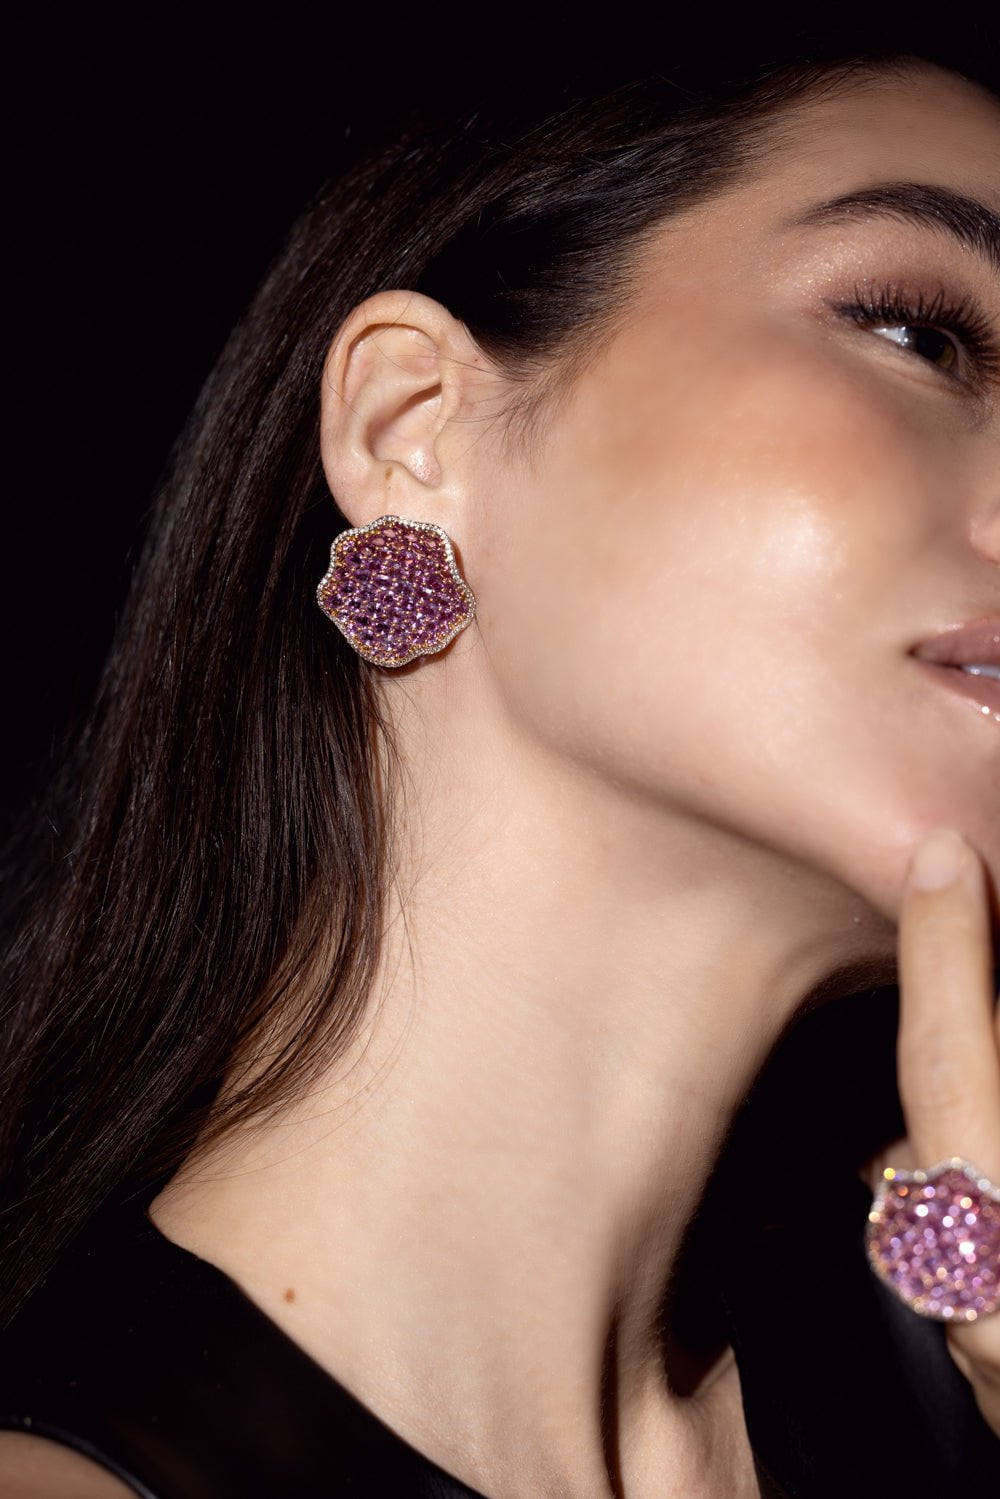 PIRANESI-Round Pink Sapphire Earrings-ROSE GOLD